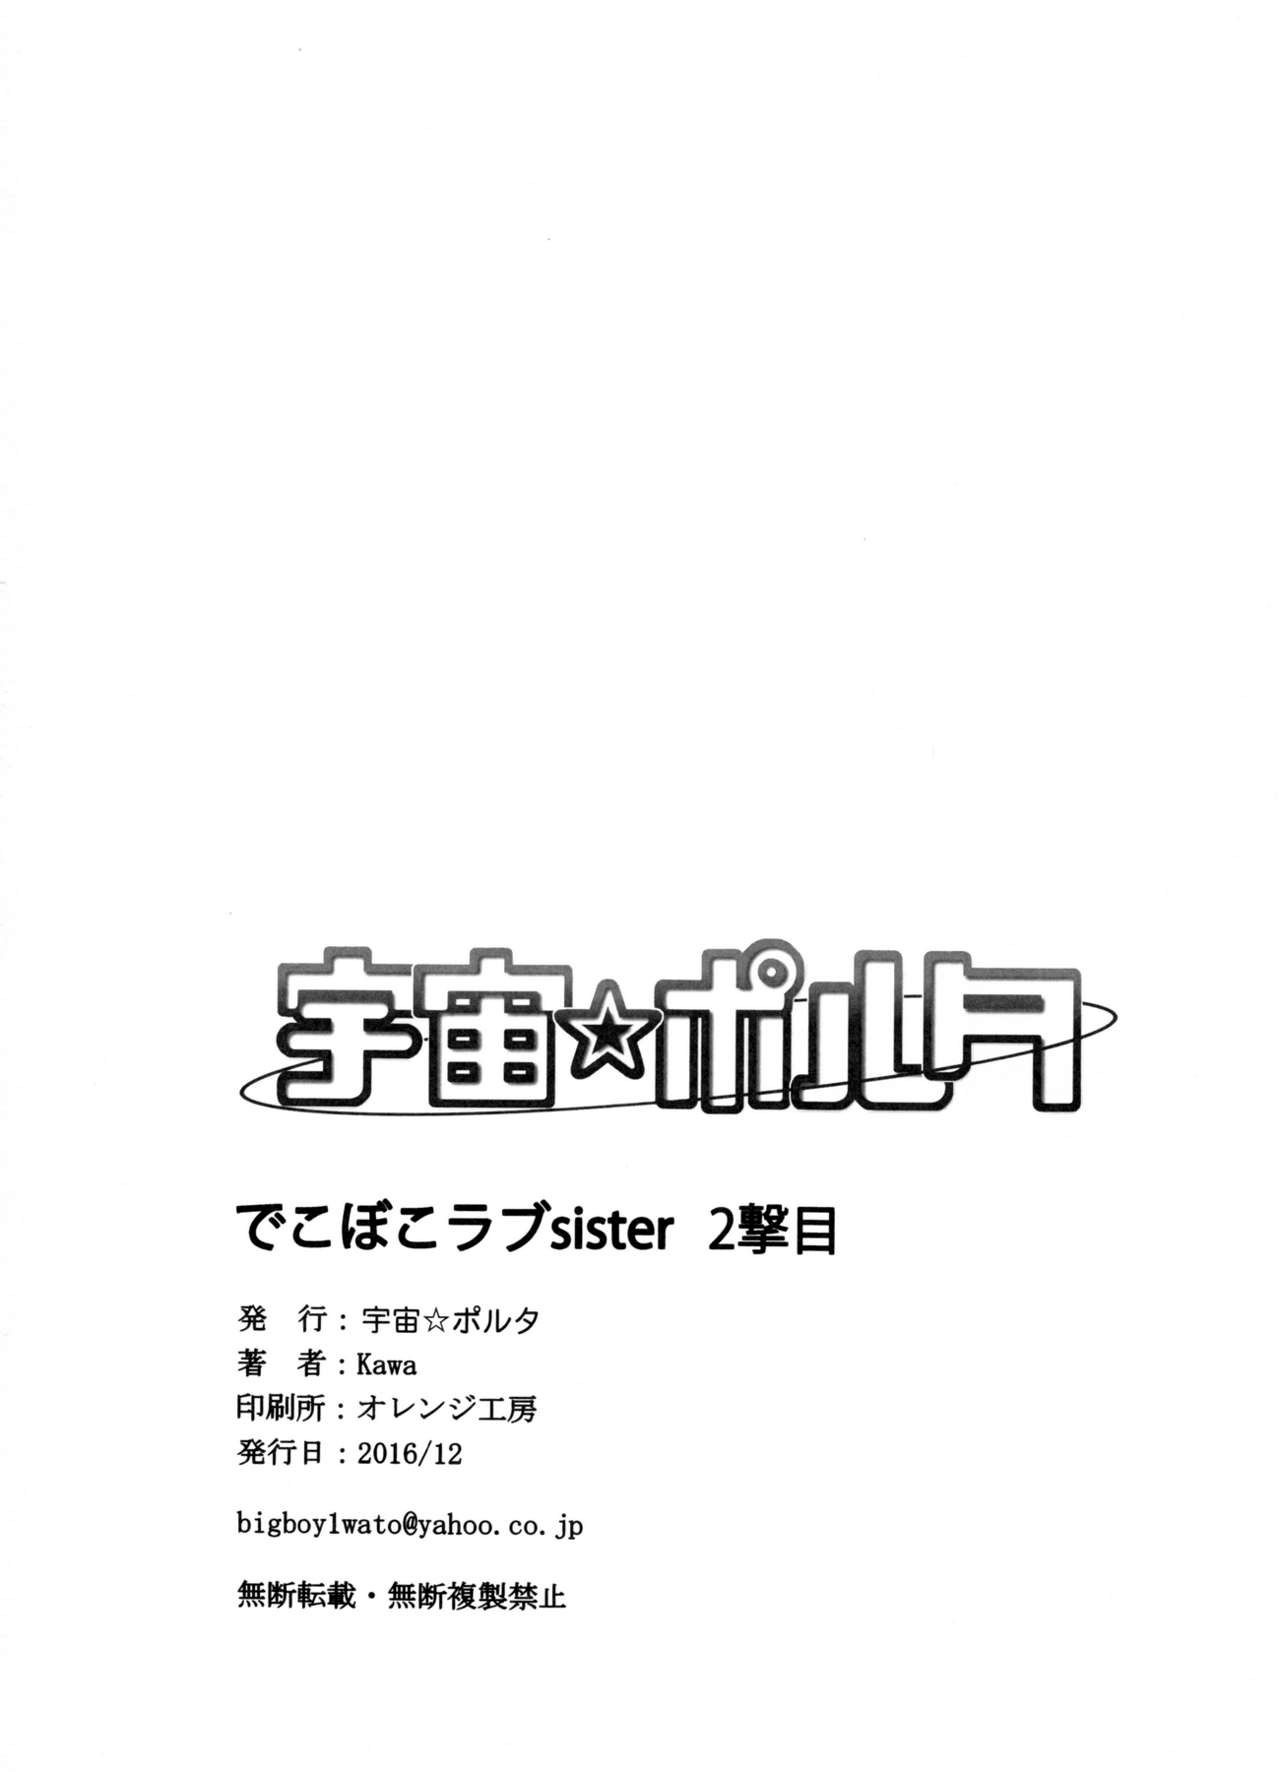 Dekoboko Love Sister 2-gekime! - 24